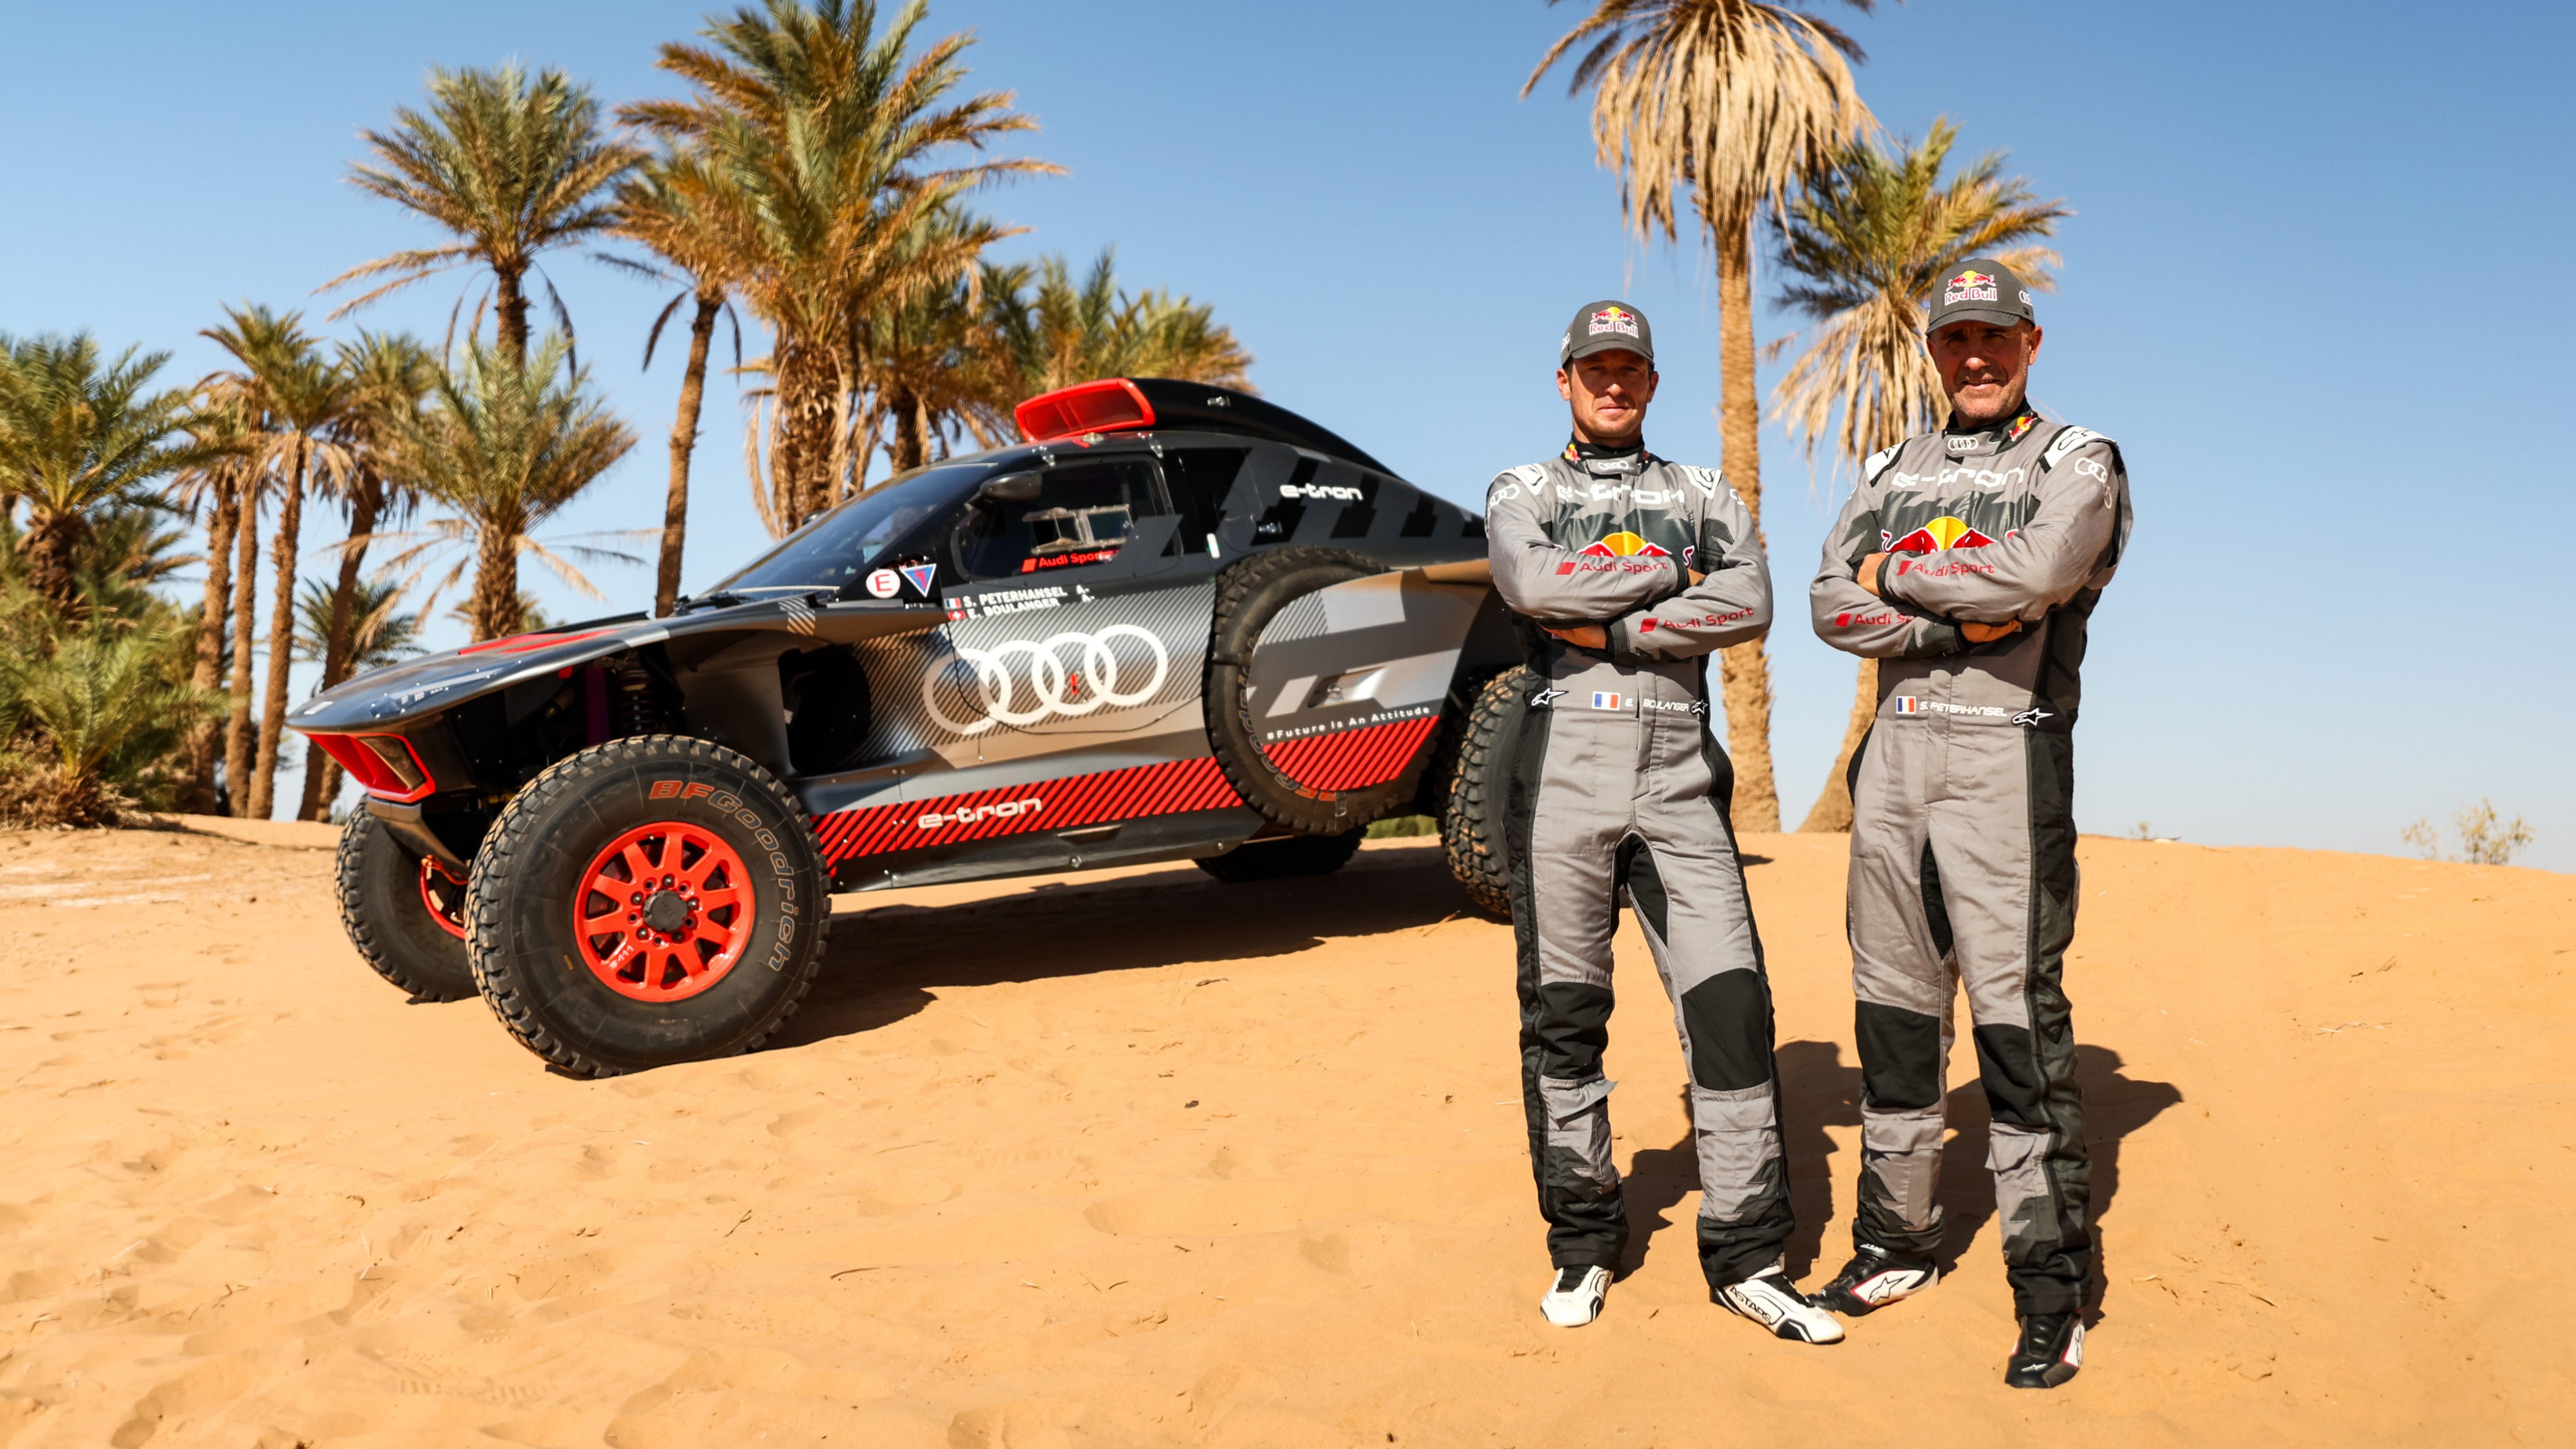 Dakar Rally 2024: Team Audi Sport ahead of a great challenge